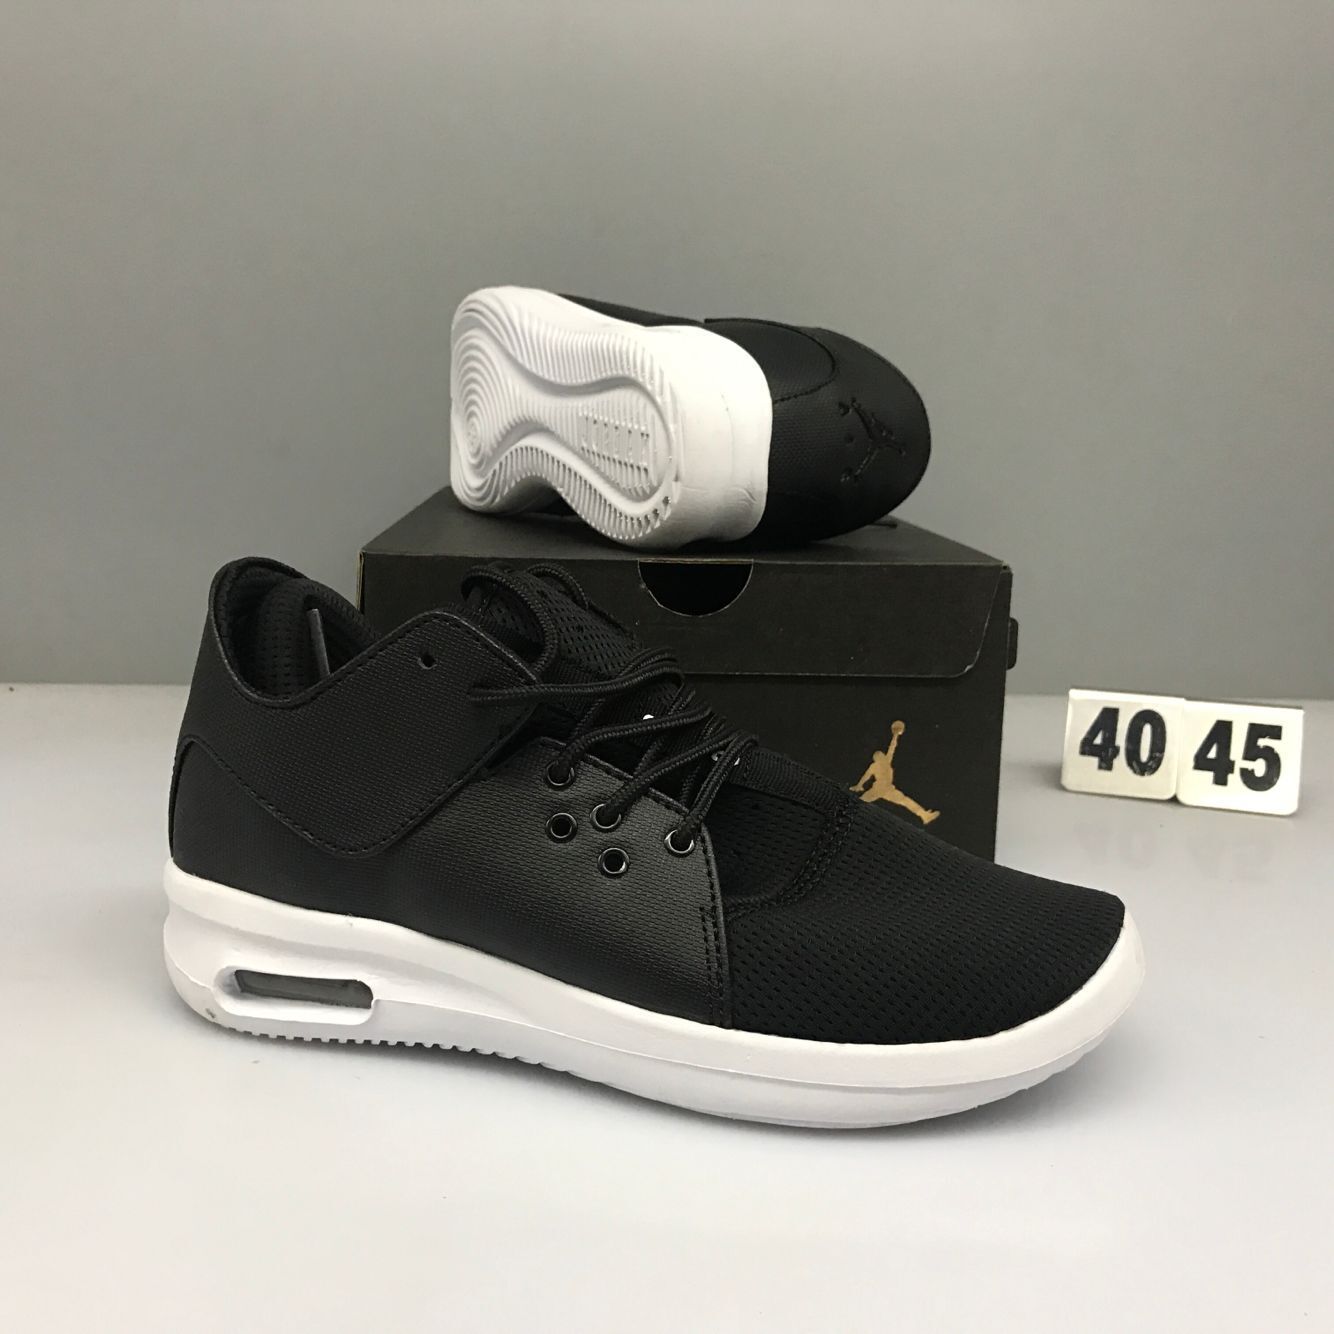 Nike Air Jordan First Classic Black White Running Shoes